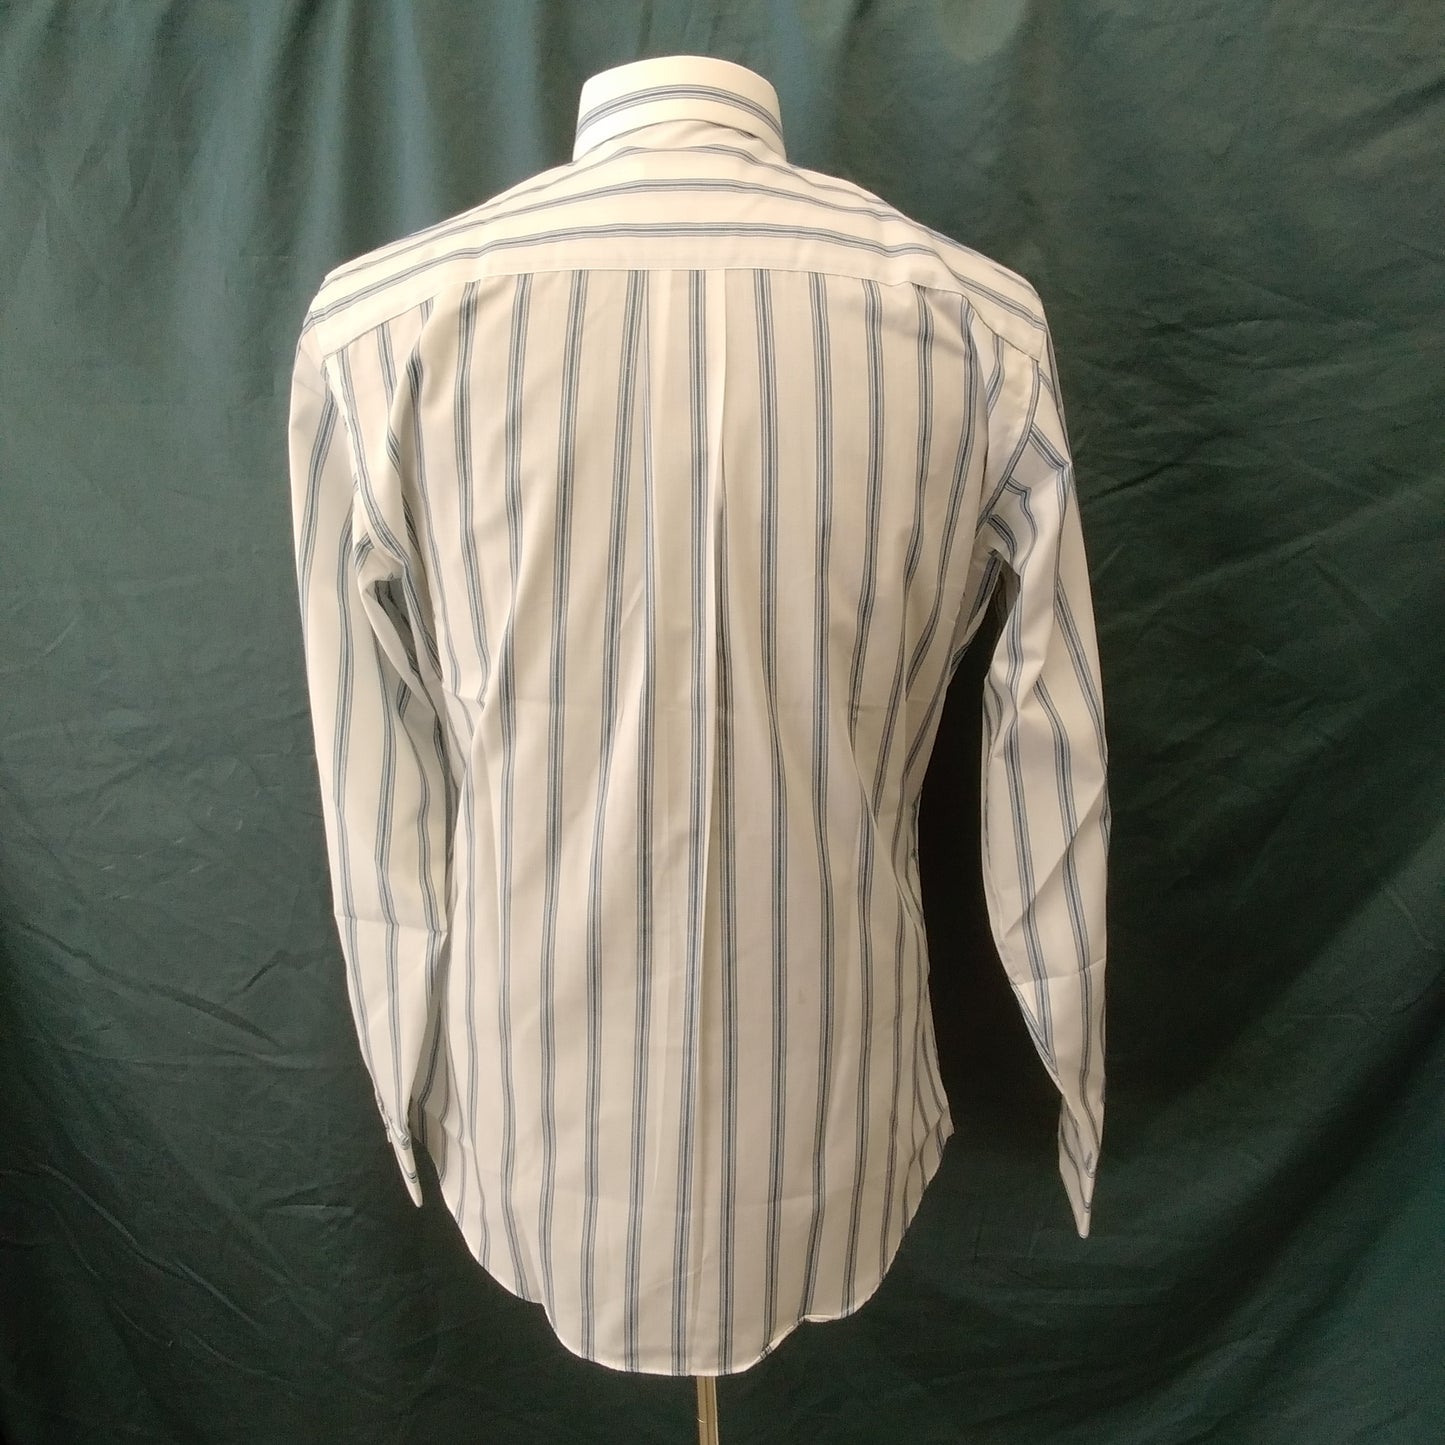 NWT - John Henry Blue Stripe Wrinkle Free Plus Athletic Fit Shirt - 15 32-33